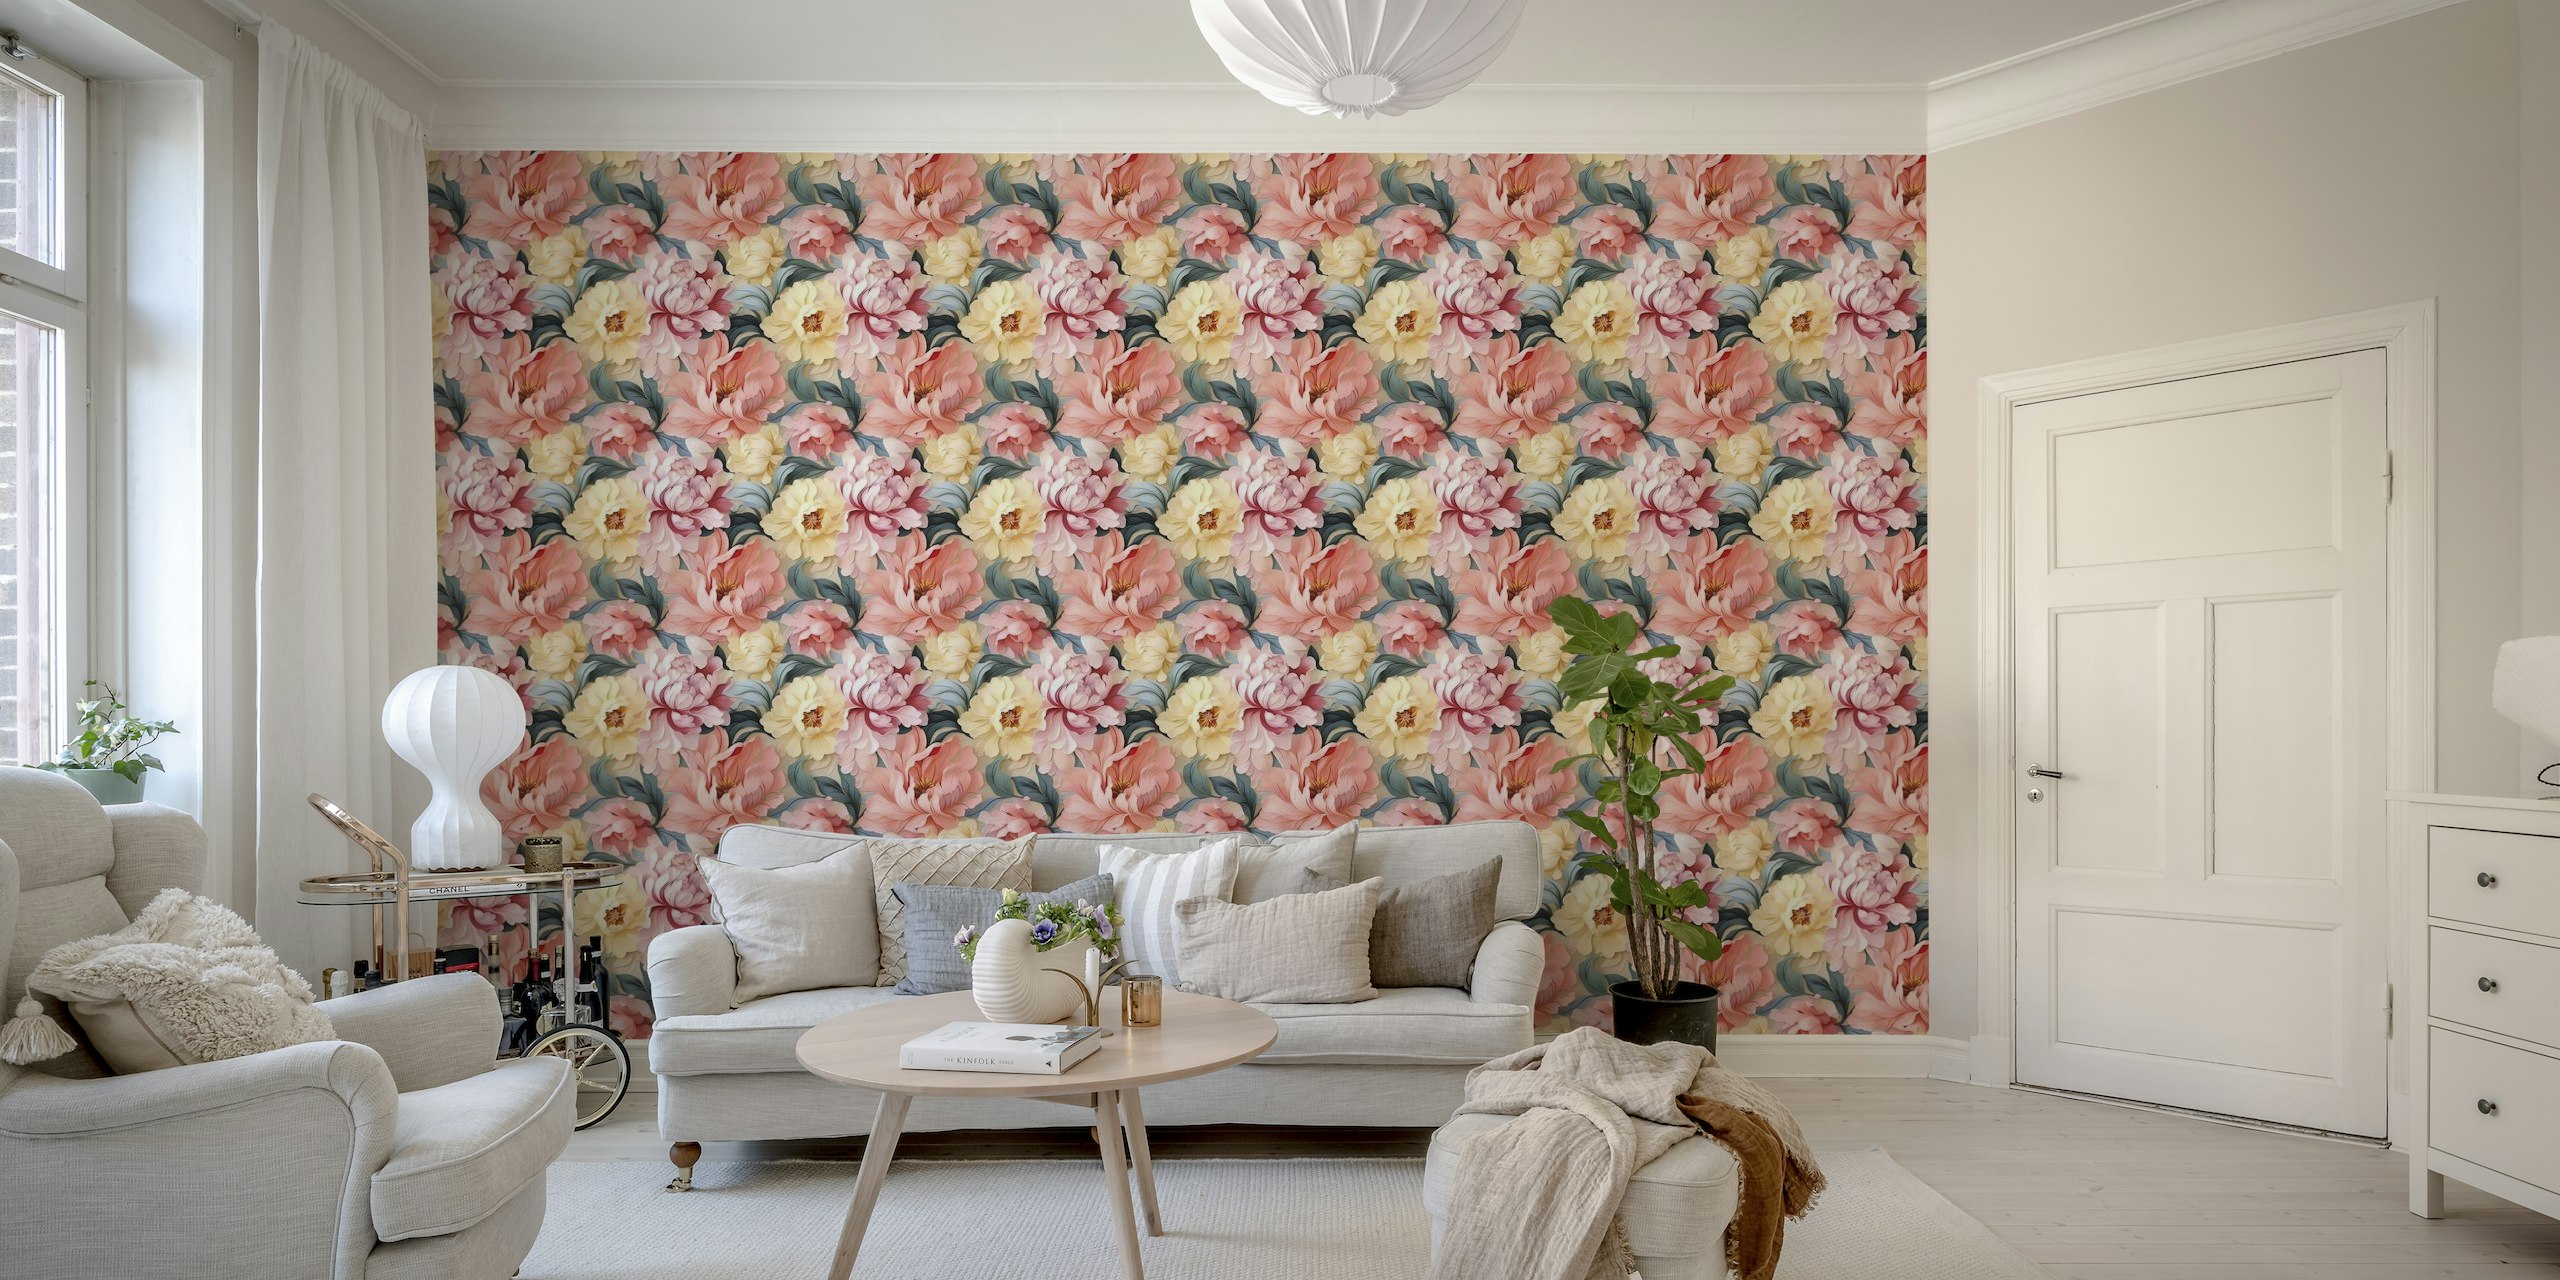 Tranquil Rose Radiance Wallpaper papel pintado